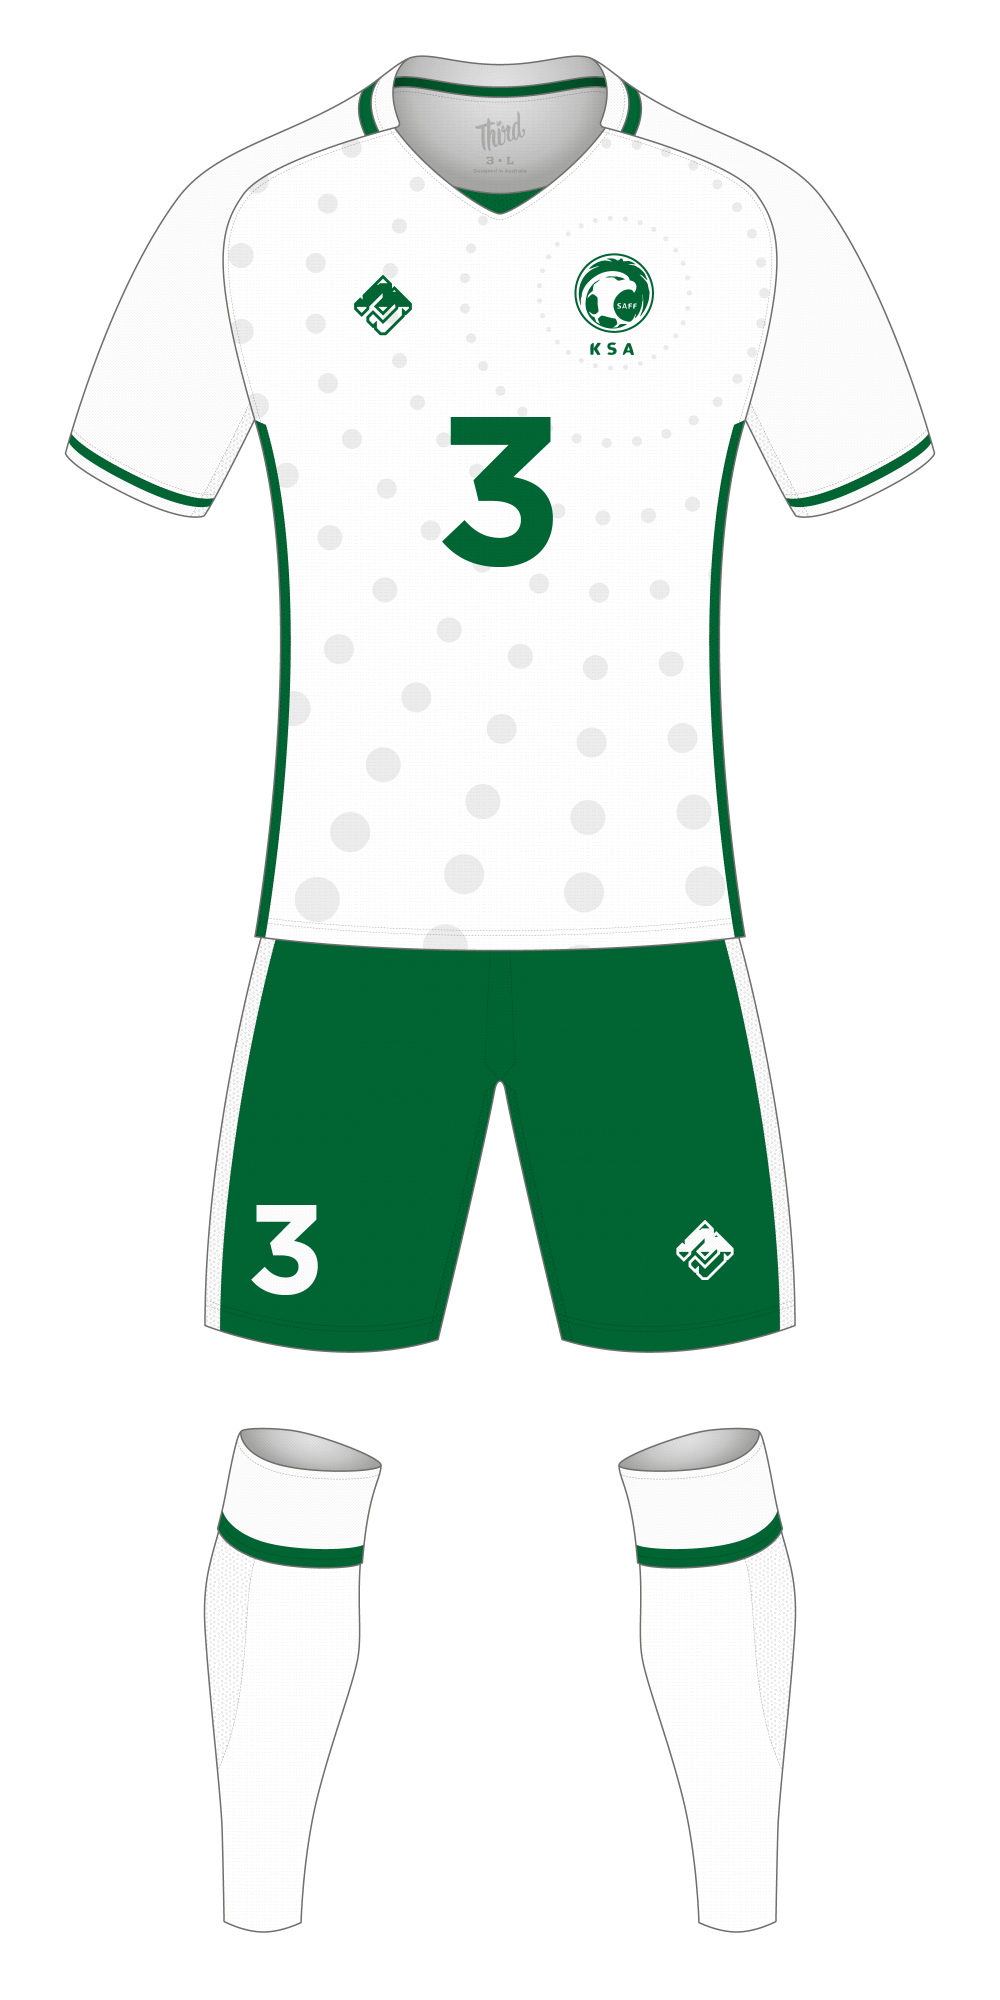 Saudi Arabia World Cup 2018 concept